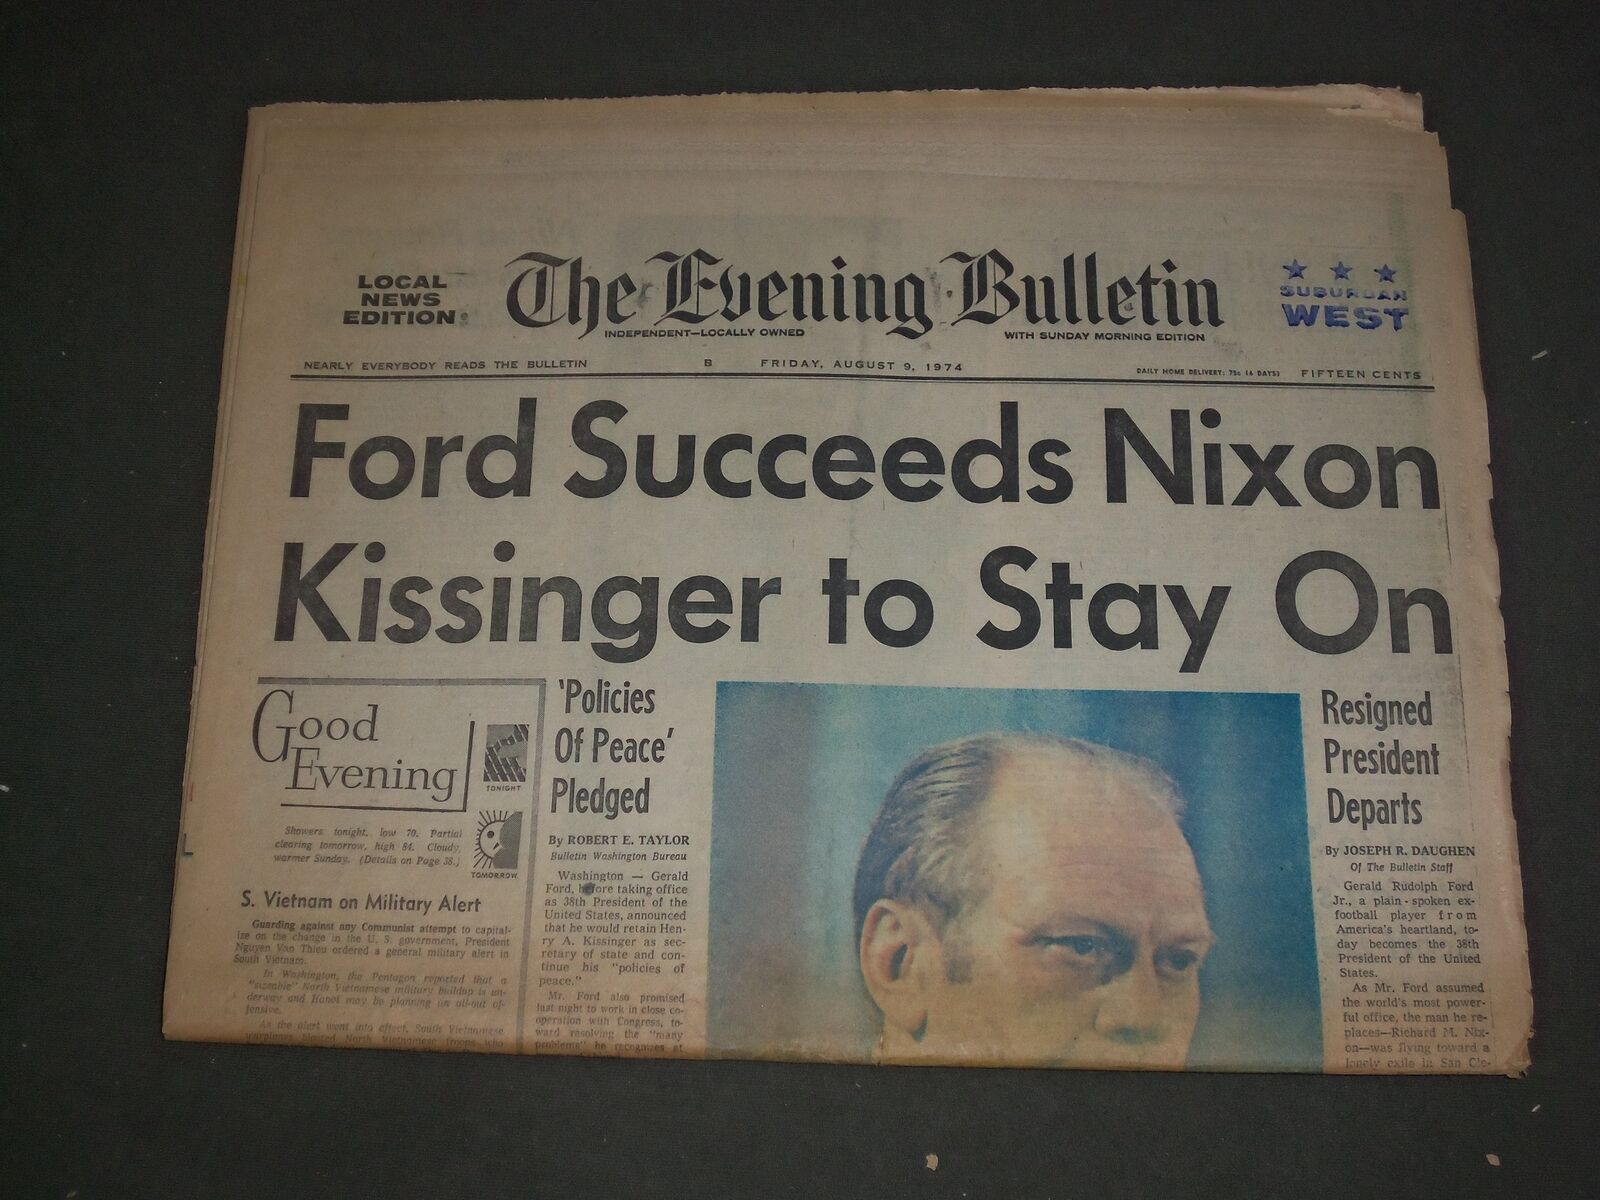 1974 AUG 9 PHILADELPHIA EVENING BULLETIN NEWSPAPER - FORD INAUGURATION - NP 3178